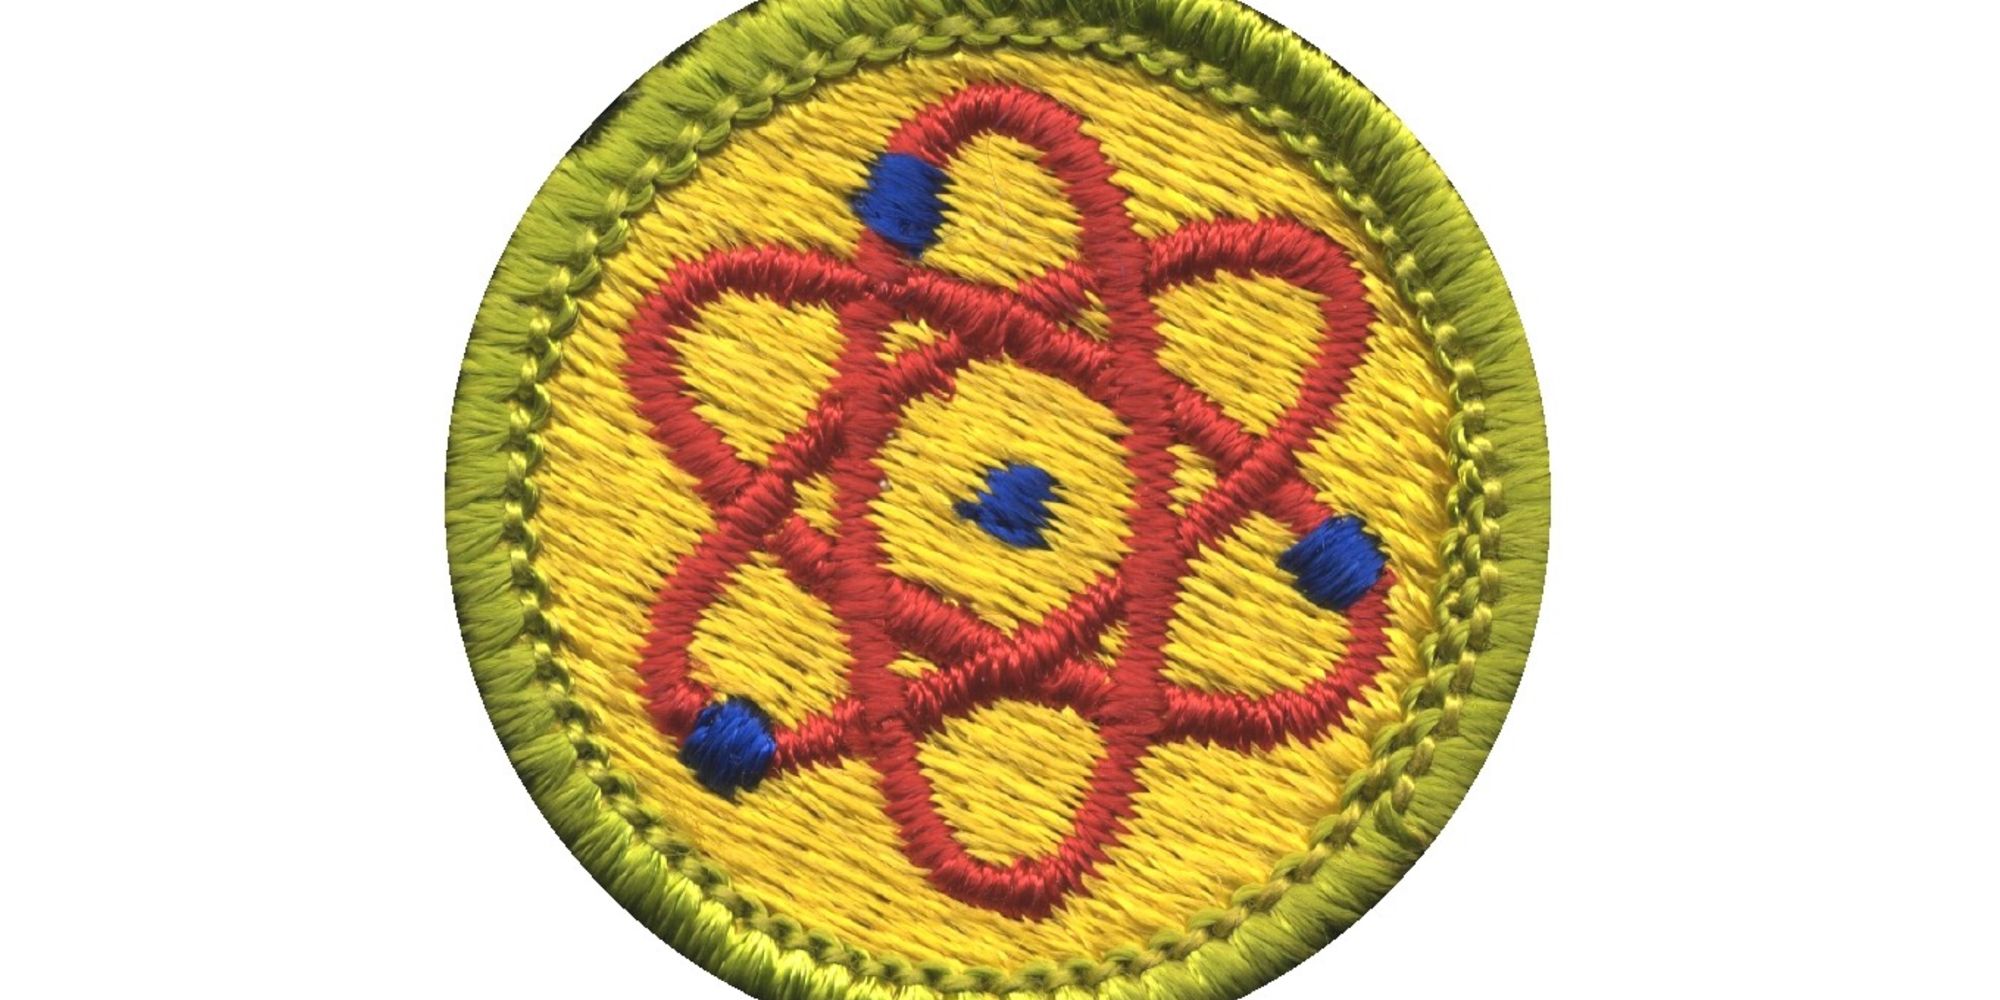 The atomic energy merit badge that David Hahn also achieved. 